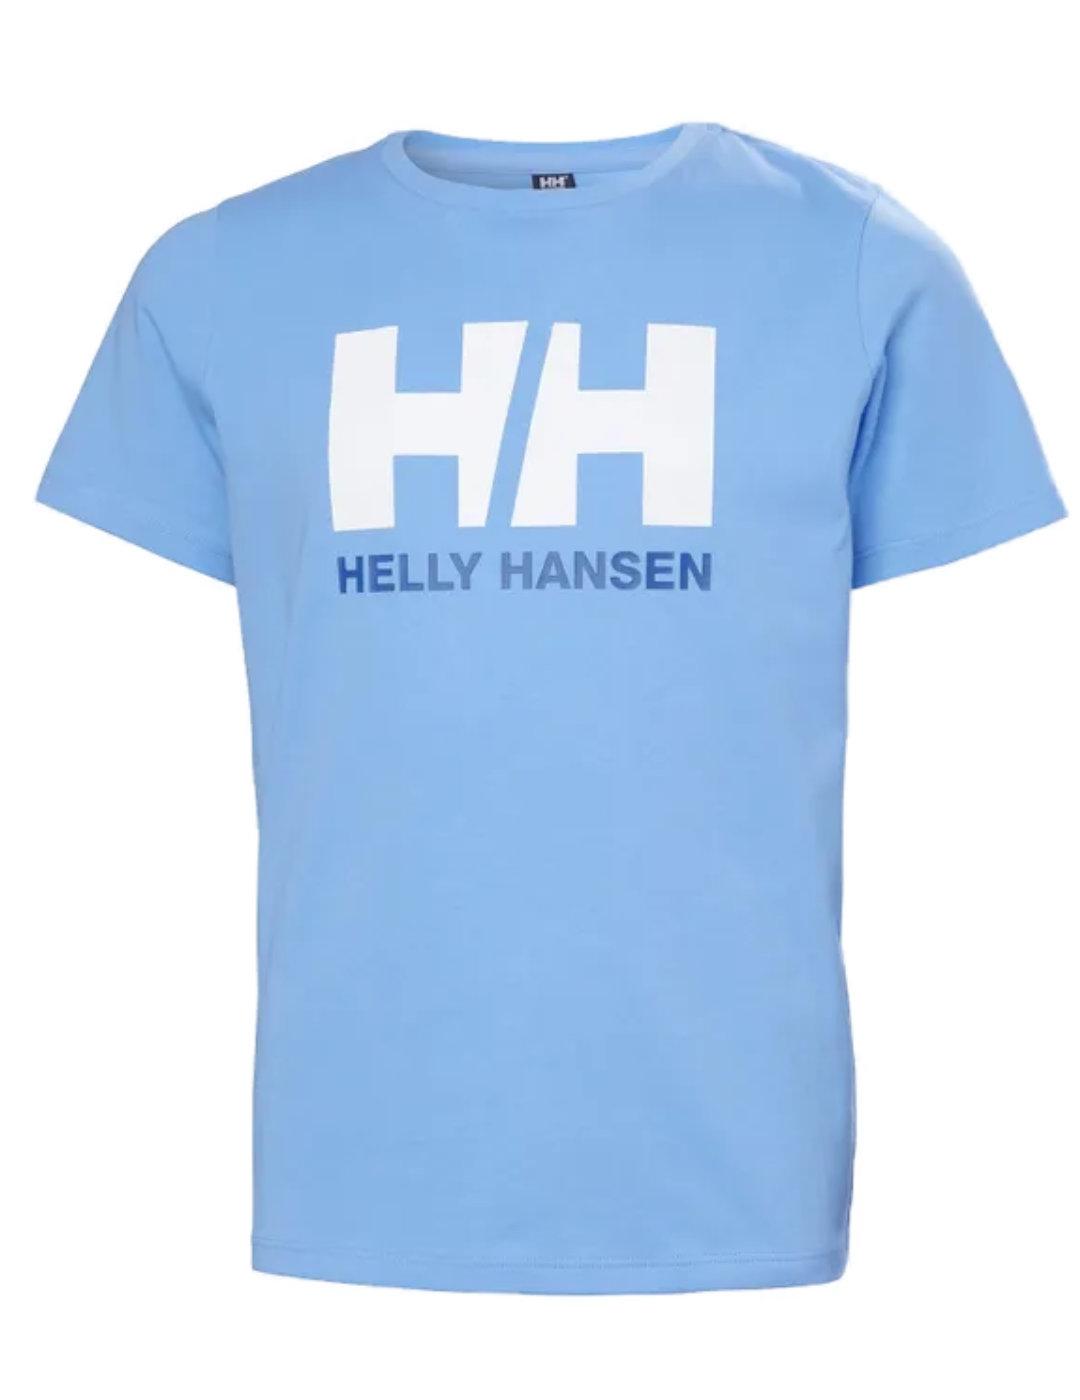 Camiseta Helly Hansen Kids Logo celeste manga corta unisex